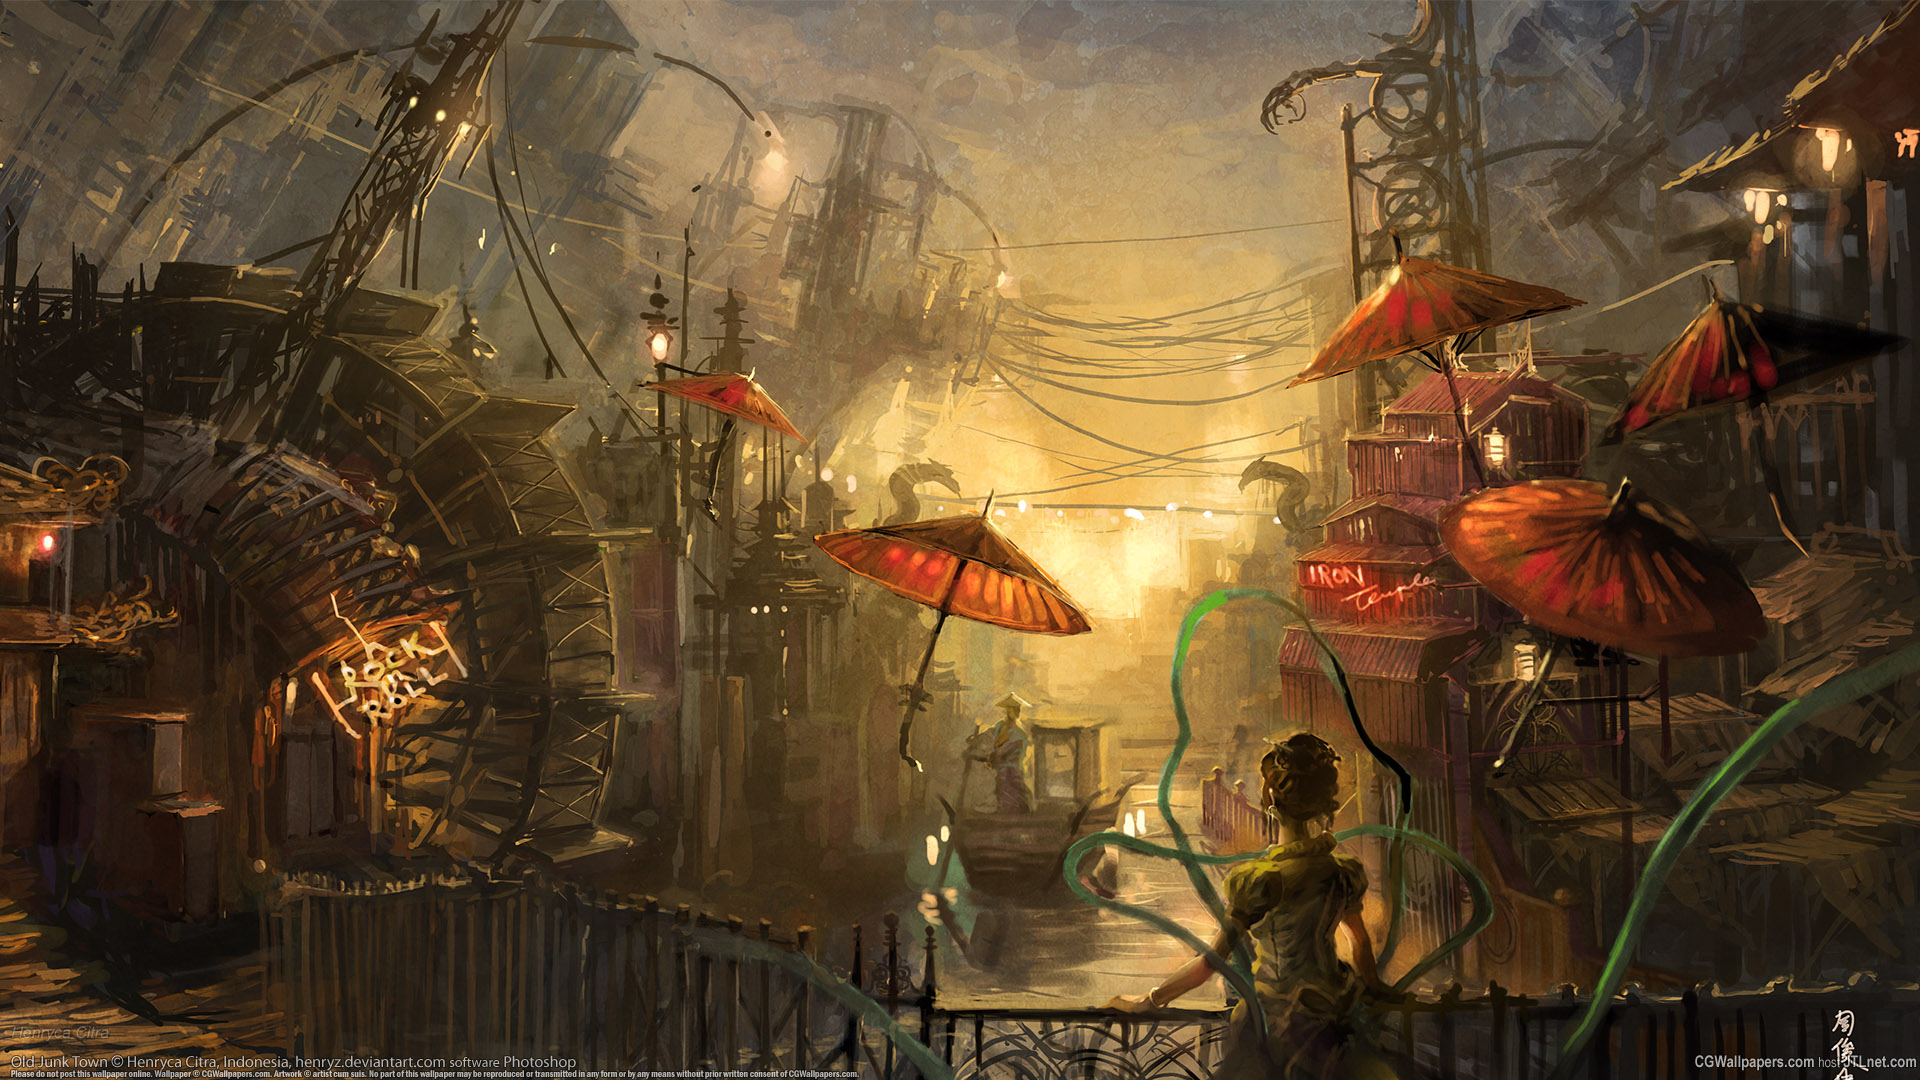 50+] Steampunk Animated Wallpaper - WallpaperSafari